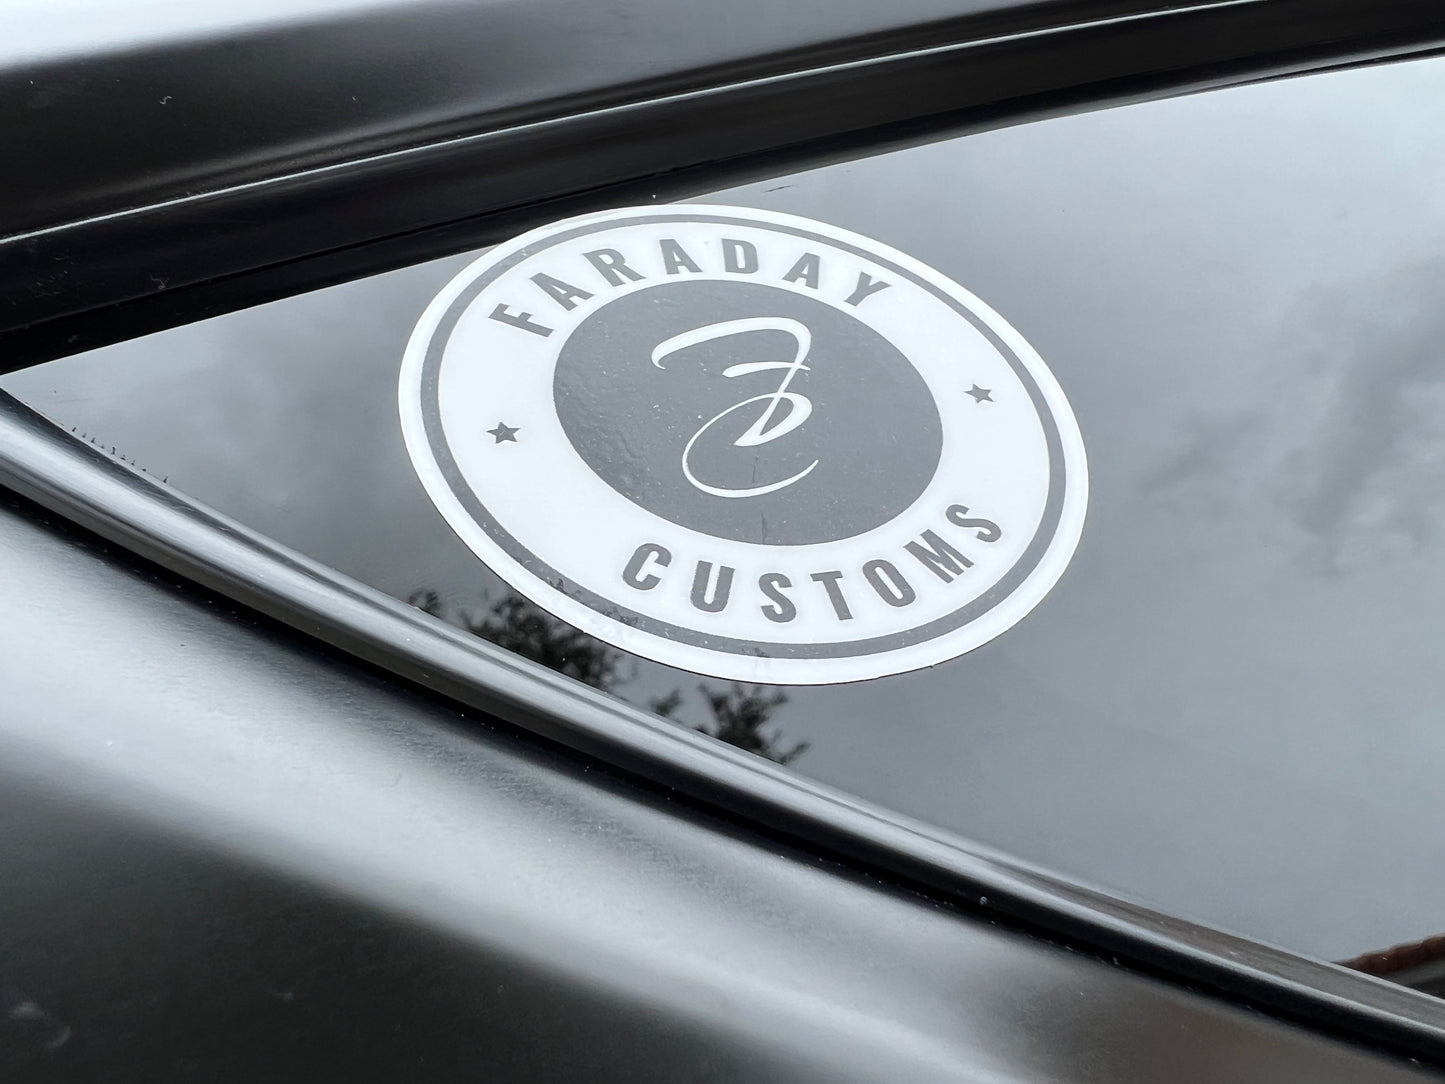 Faraday Customs Circular Sticker